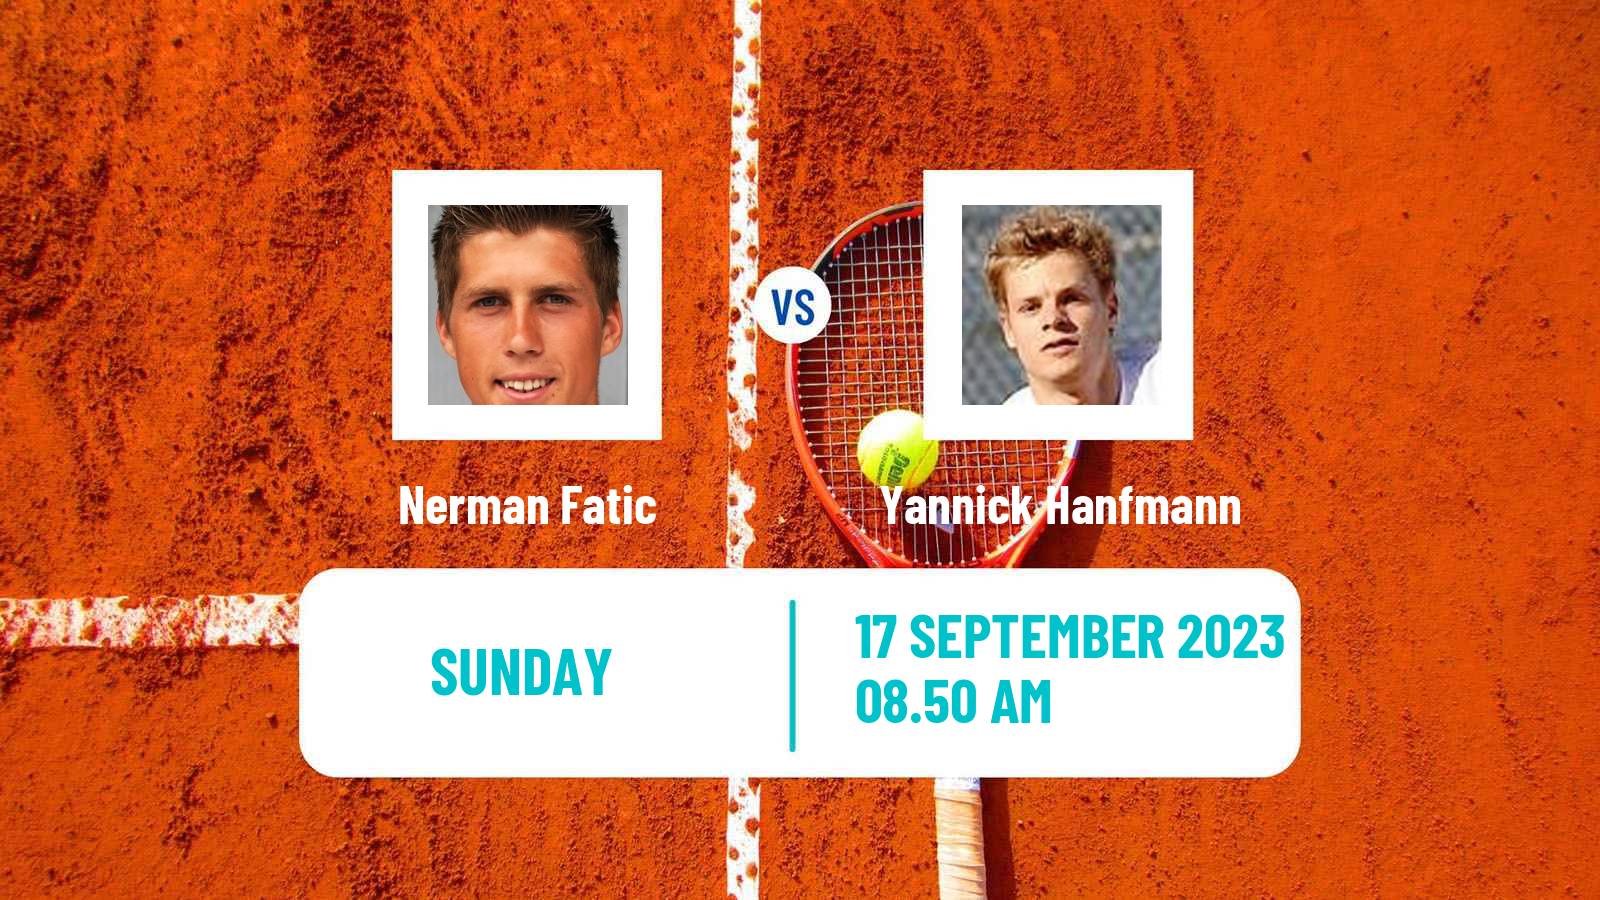 Tennis Davis Cup World Group I Nerman Fatic - Yannick Hanfmann